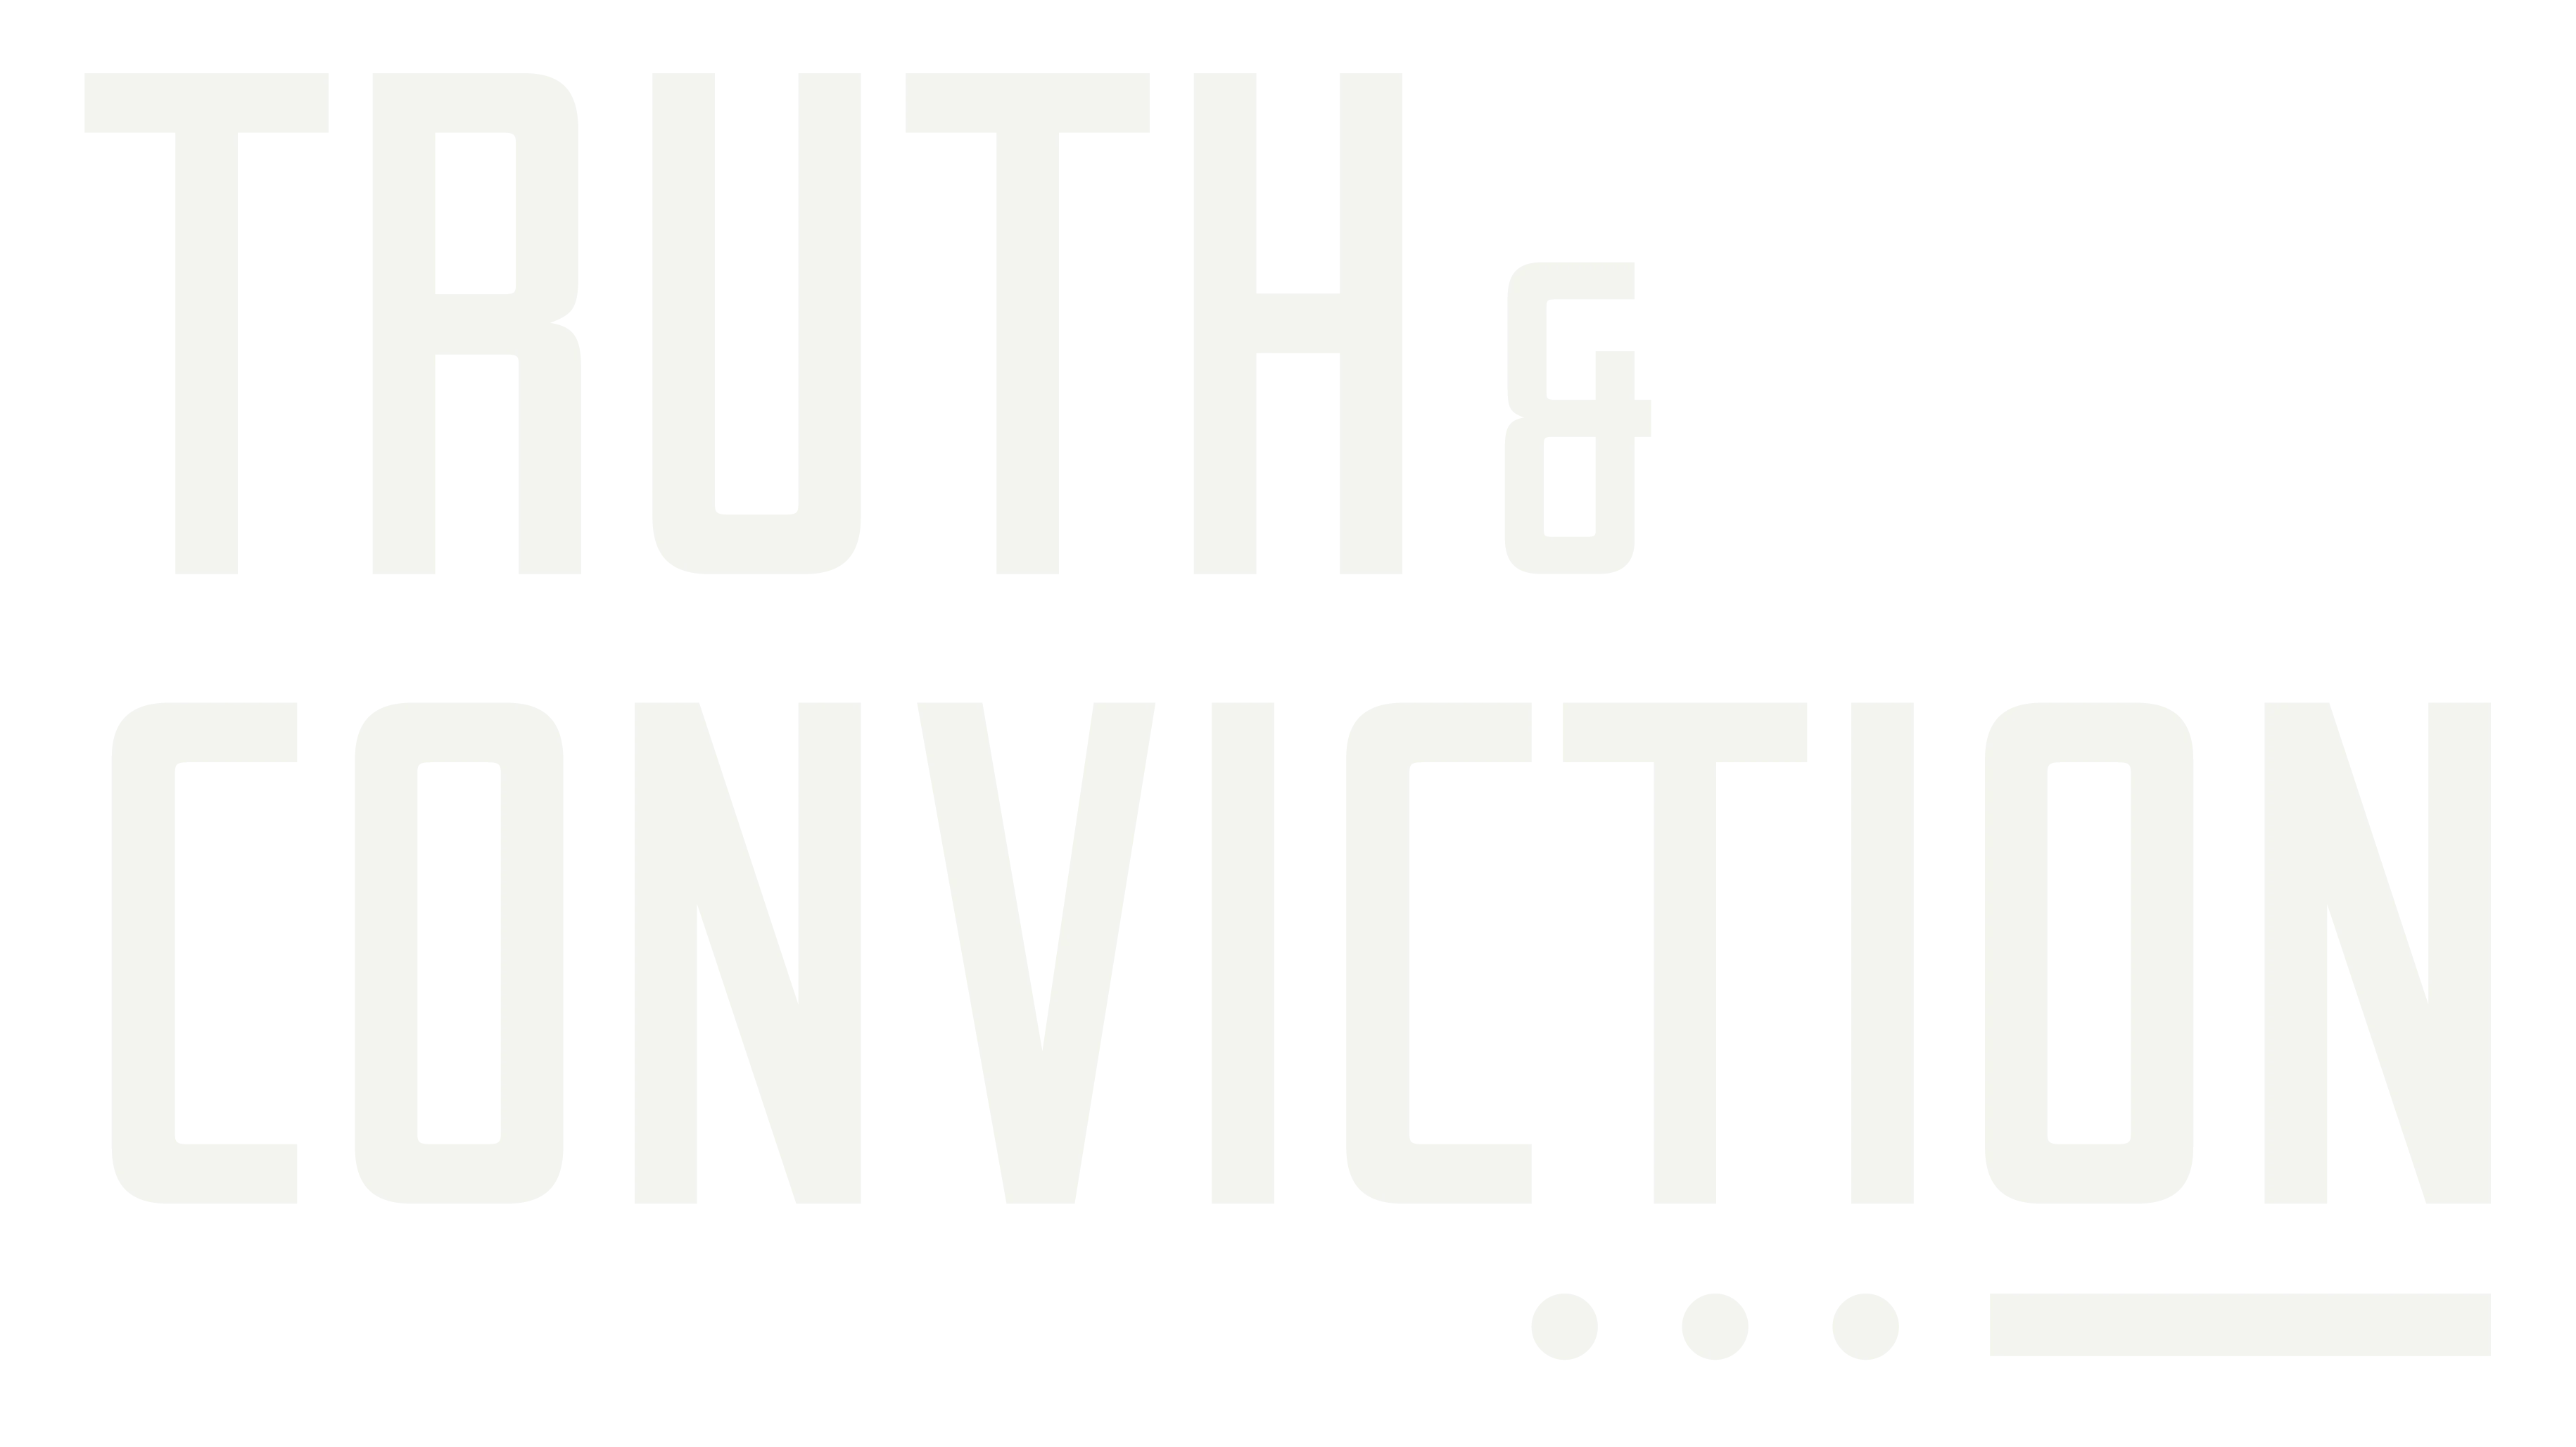 Truth & Conviction